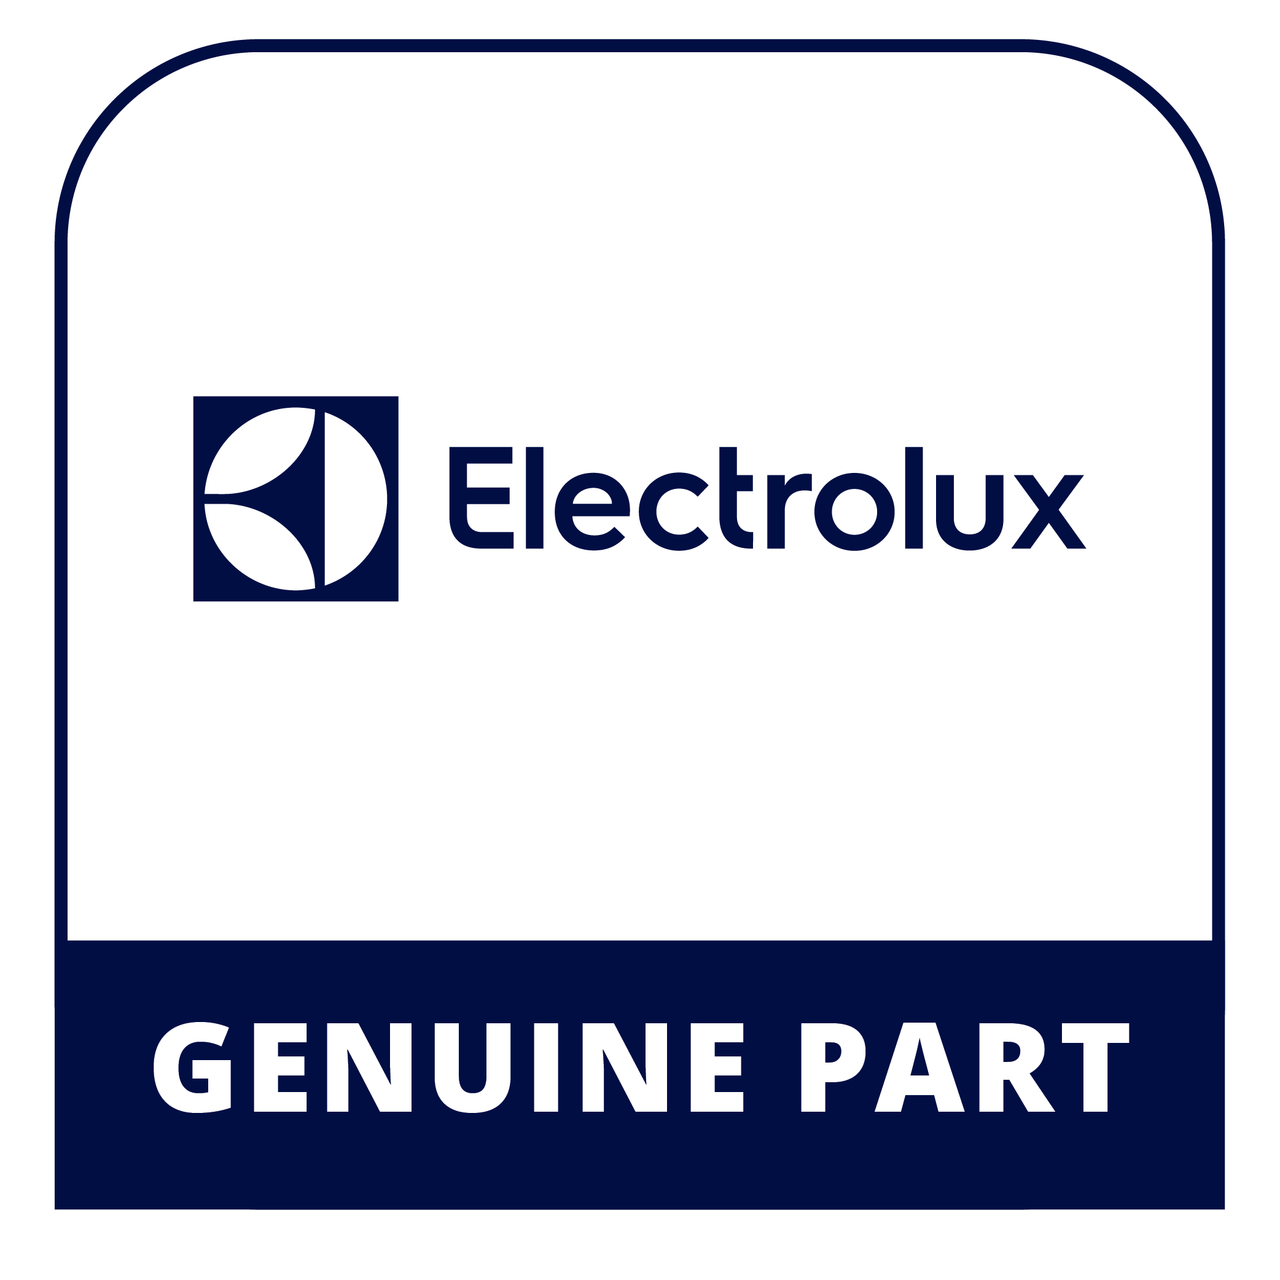 Frigidaire - Electrolux 117512440 - Control Panel - Genuine Electrolux Part